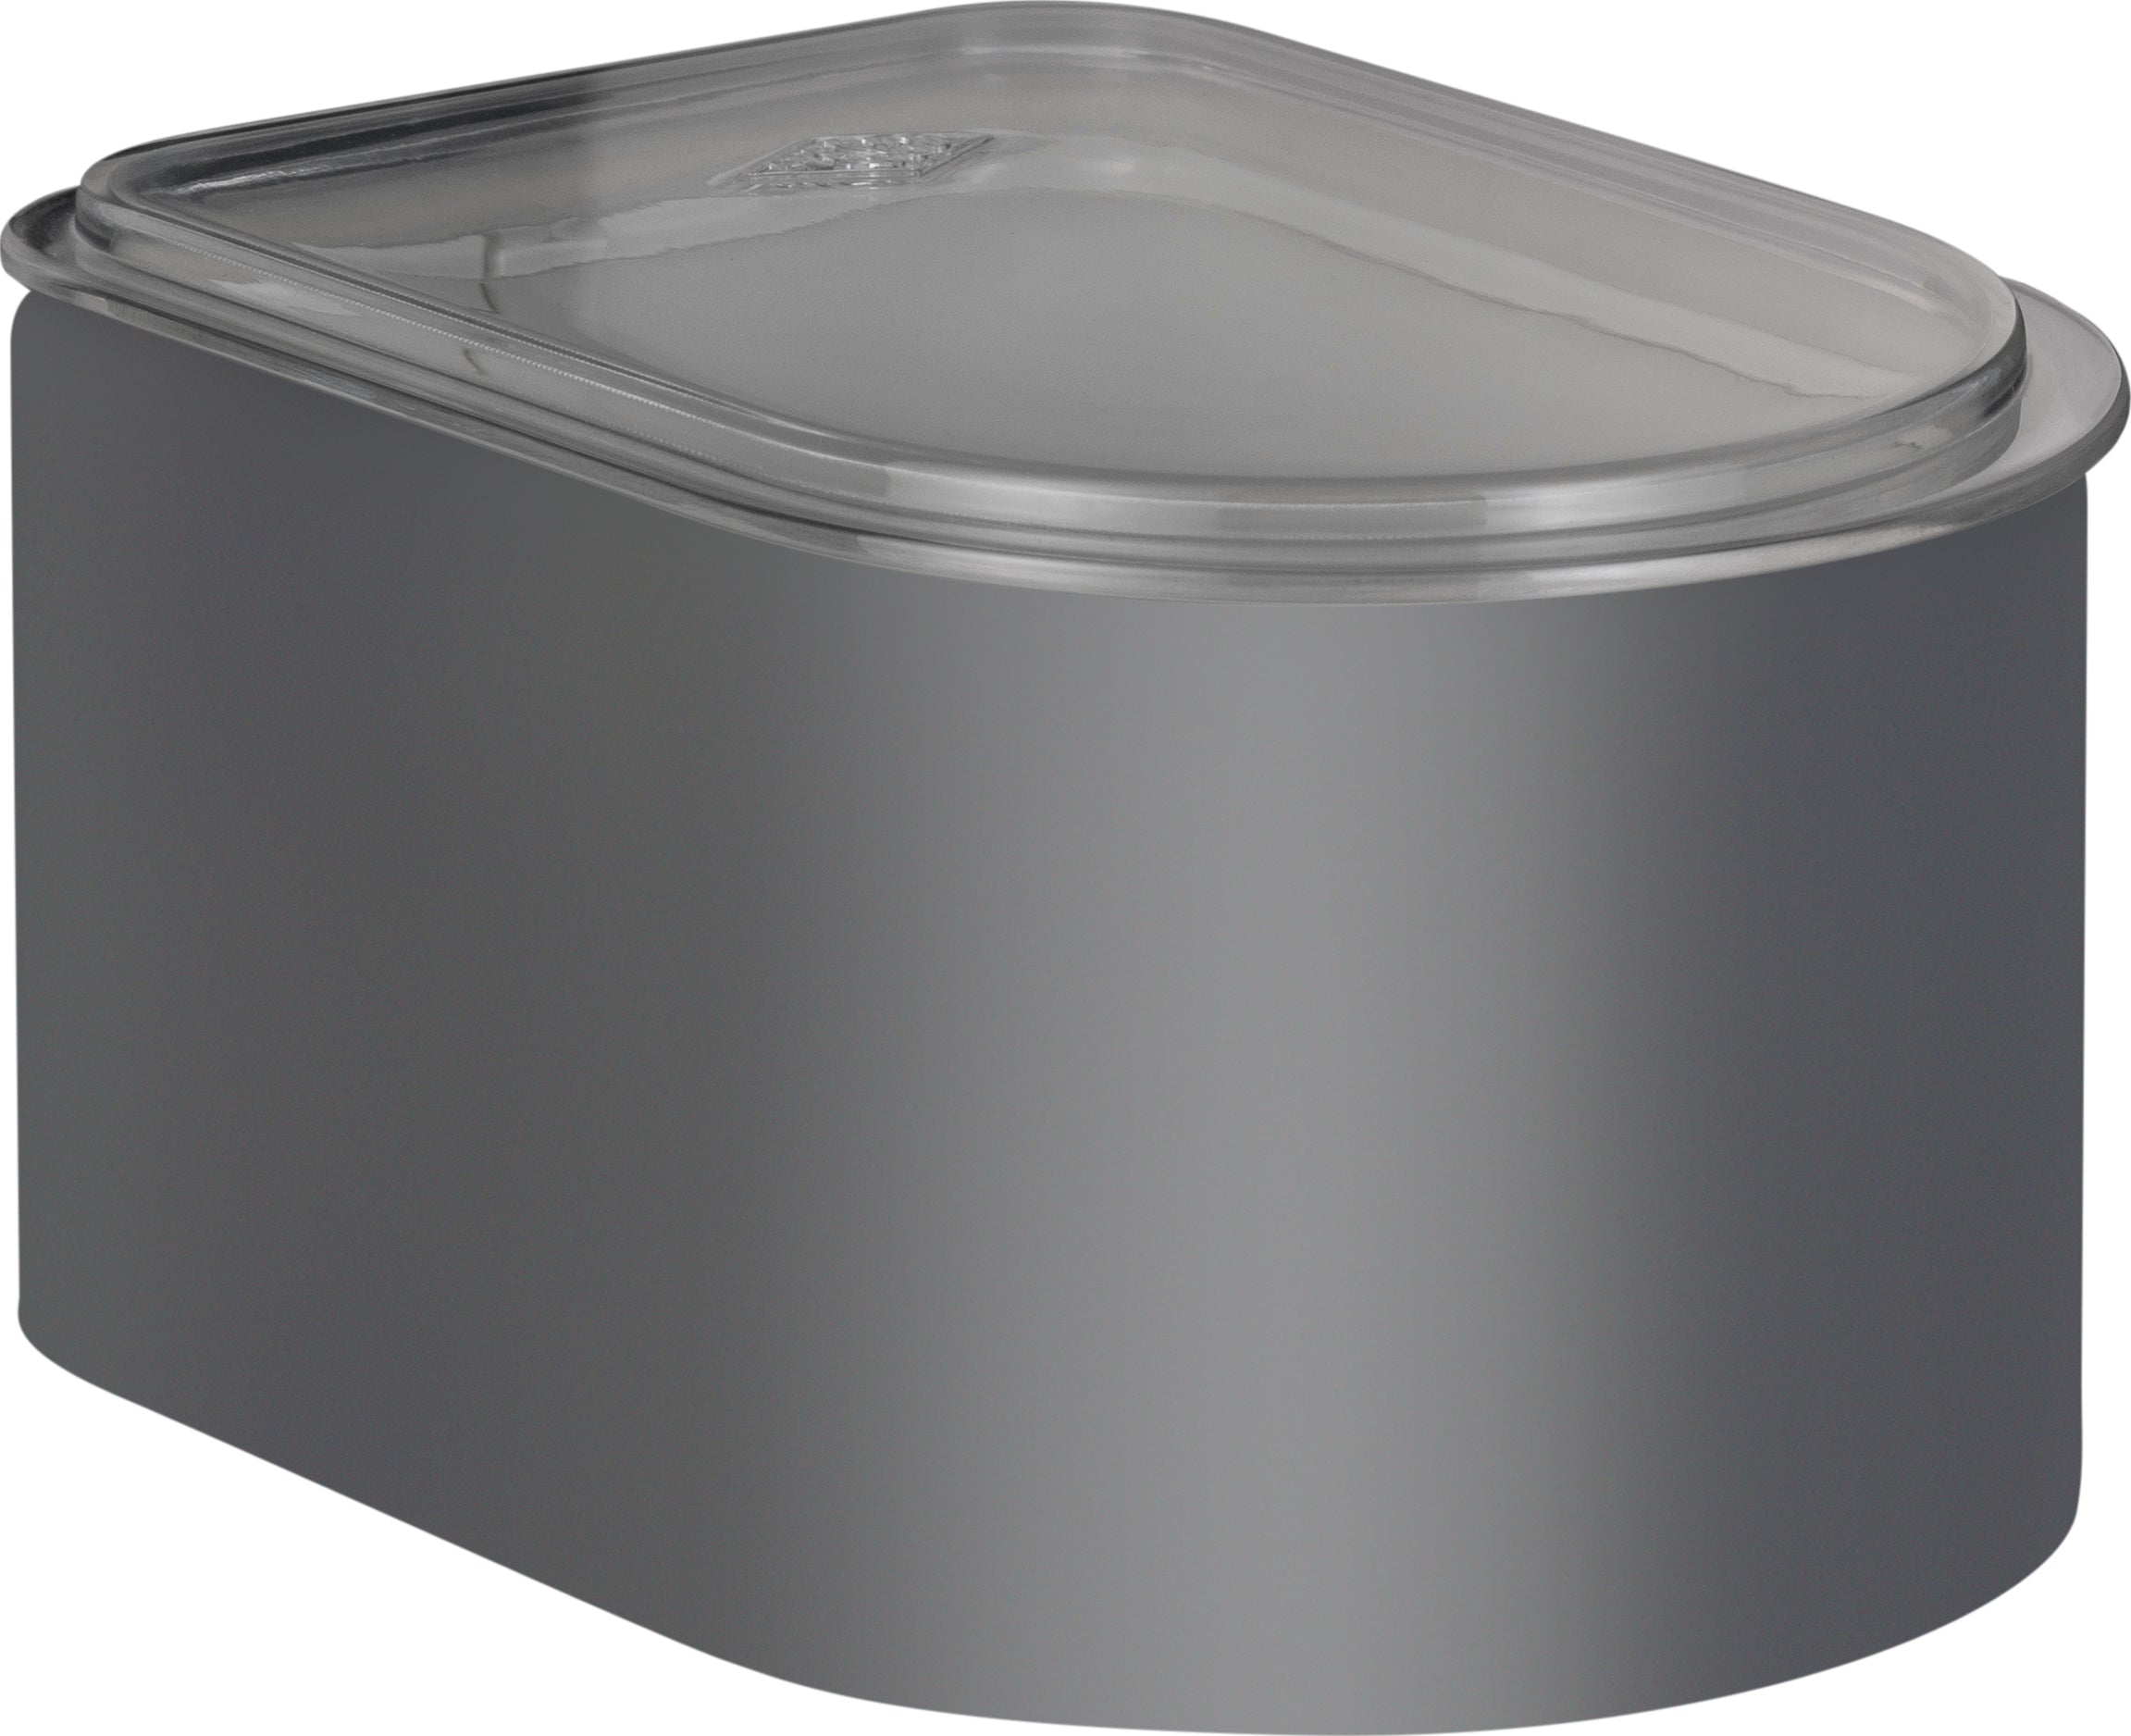 Wesco Dåse 1 liter med akryllåg, kølig grå matt